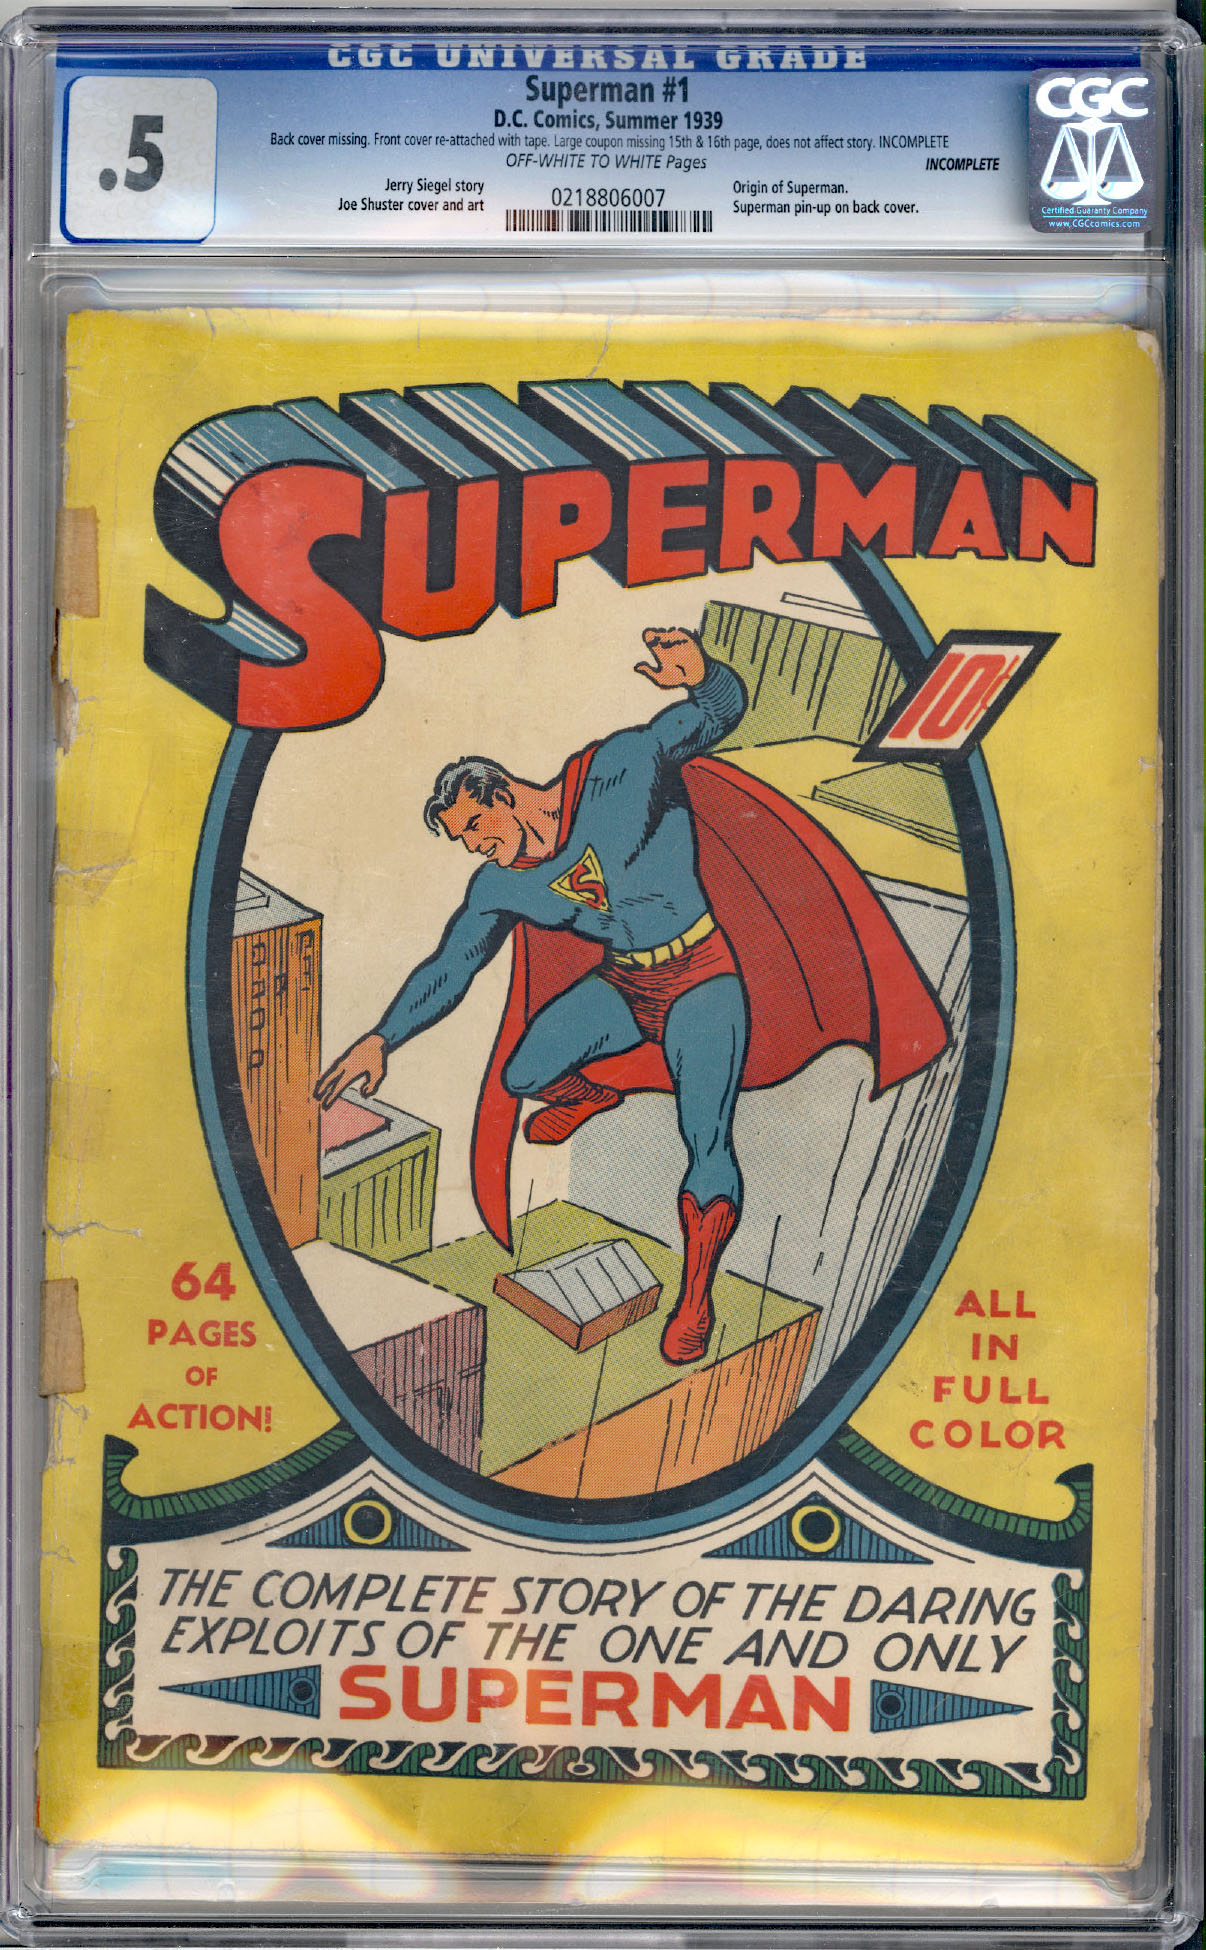 Superman #1 front